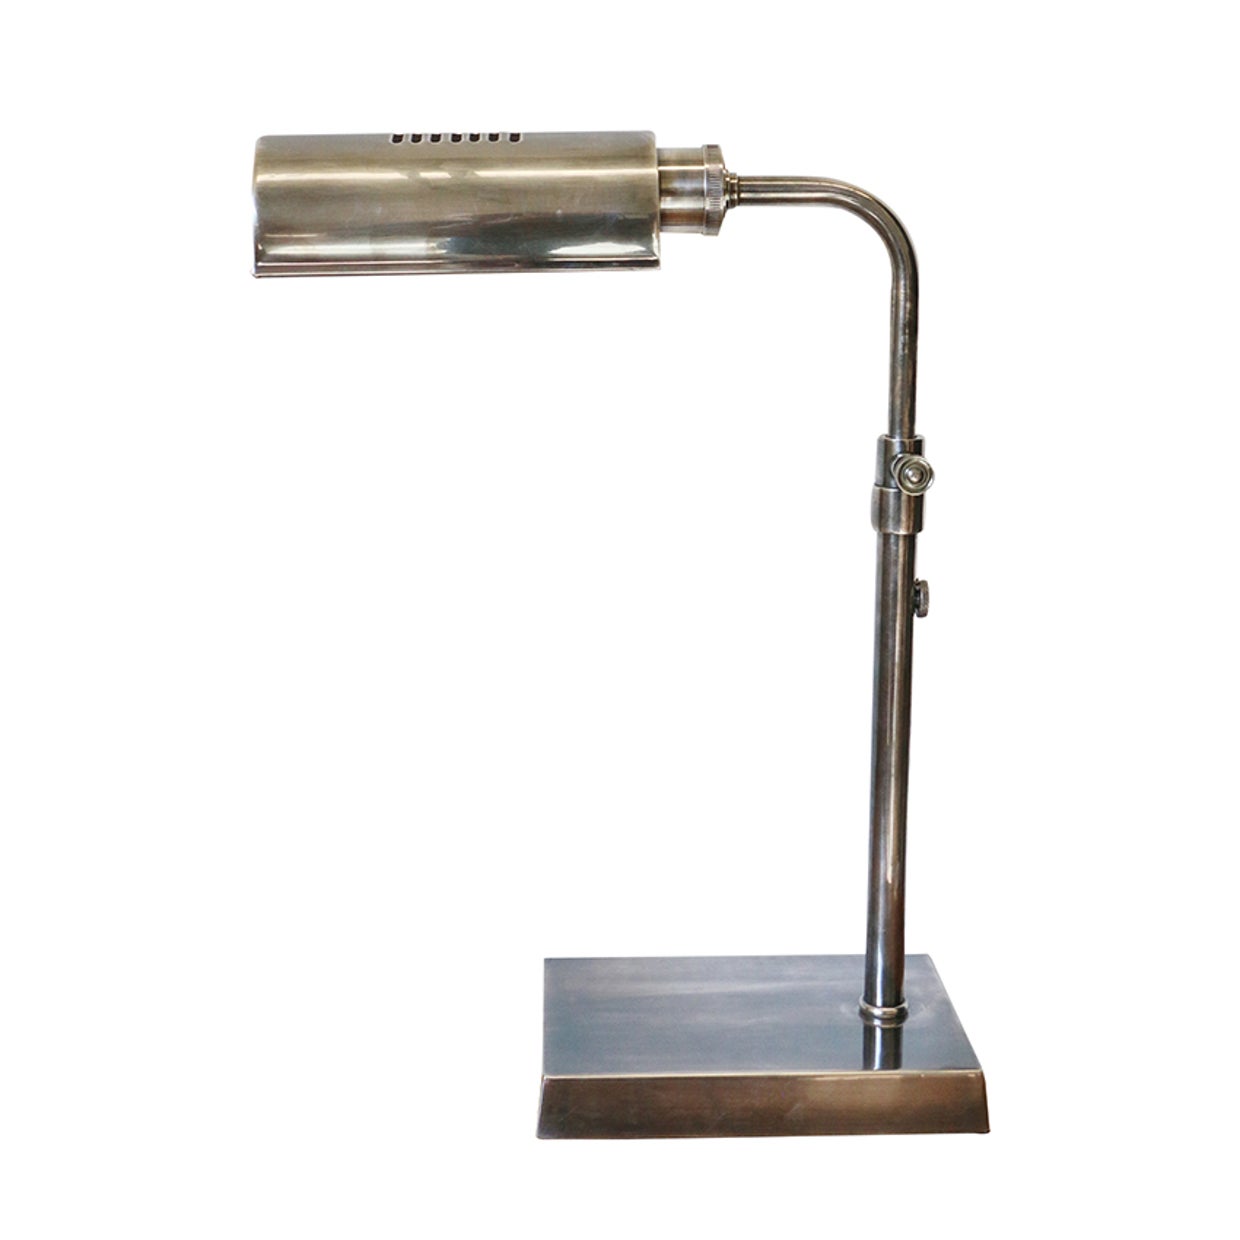 ADJUSTABLE DESK LAMP BASE IN PEWTER STYLE FINISH